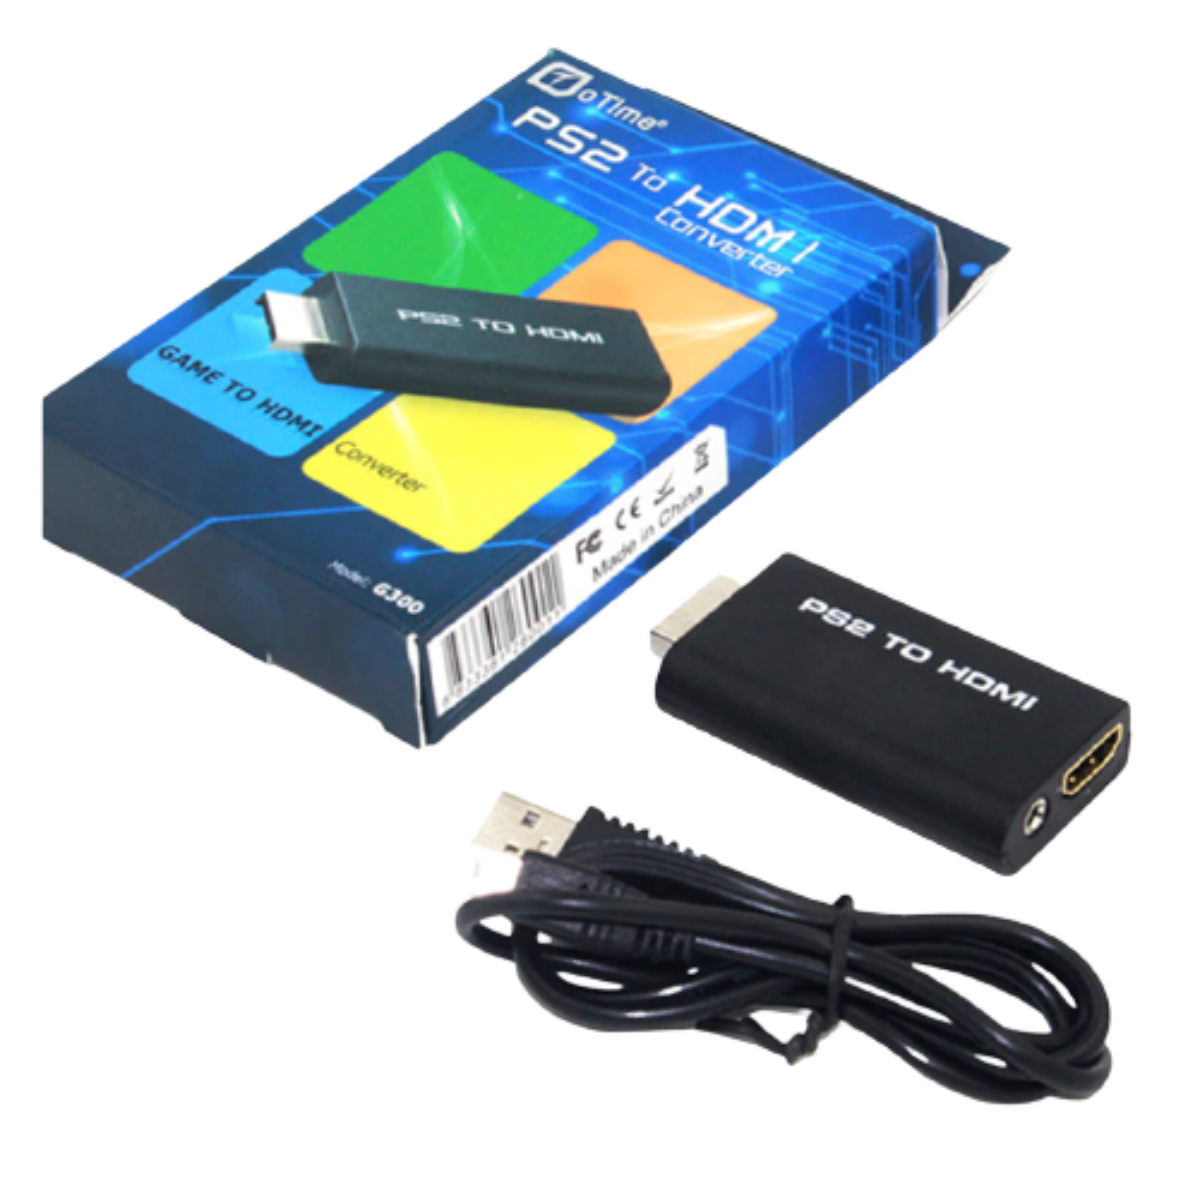 Adaptador Convertidor Audio Video PS2 - HDMI